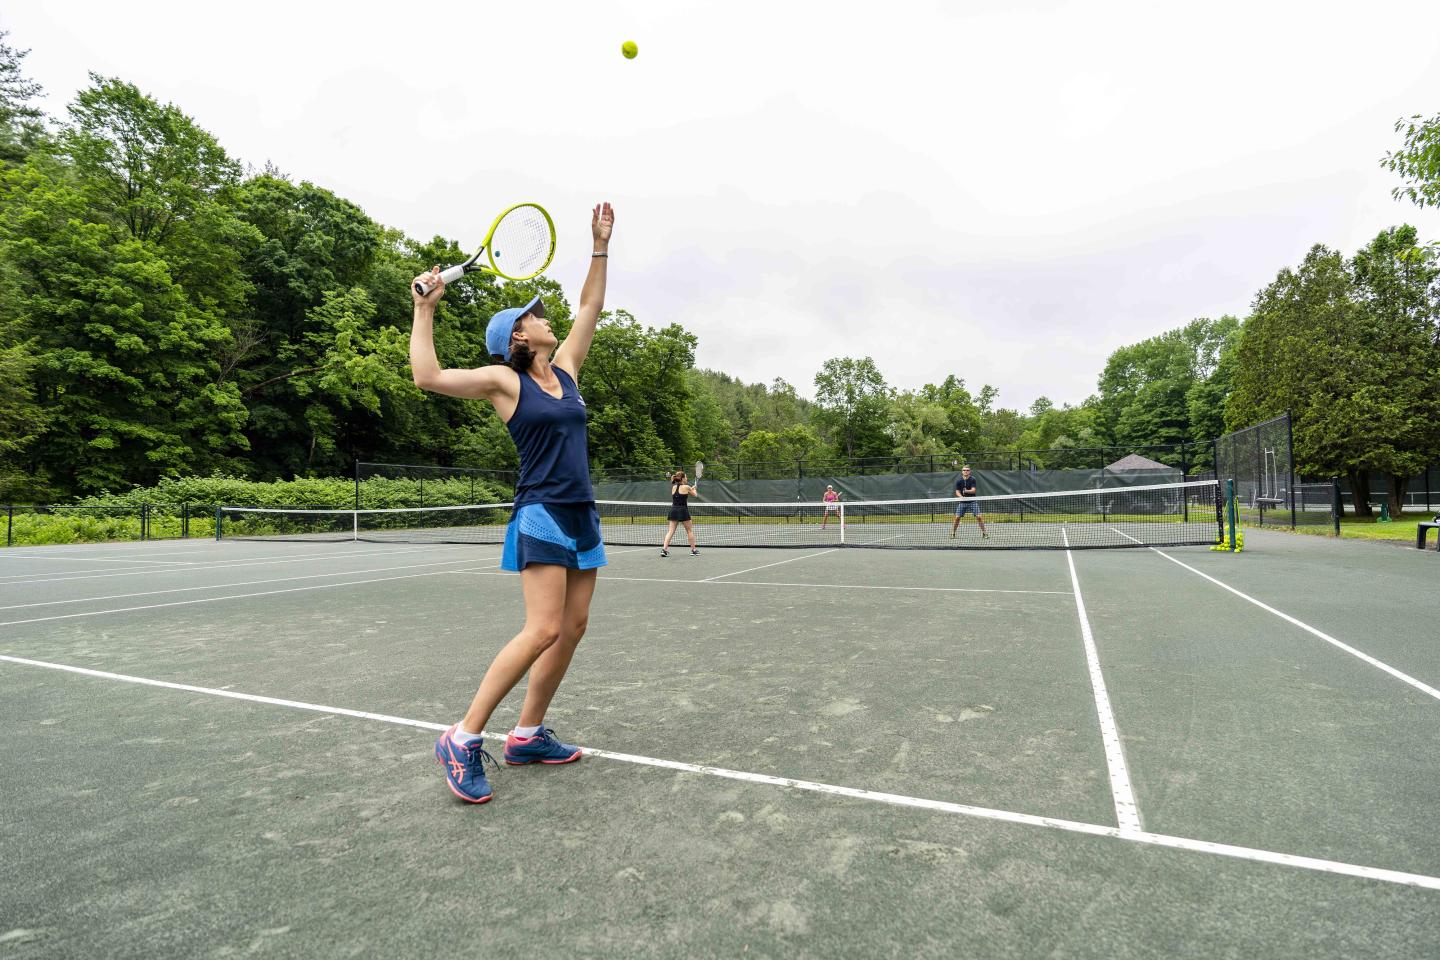 Woman on outdoor tennis court serving ball